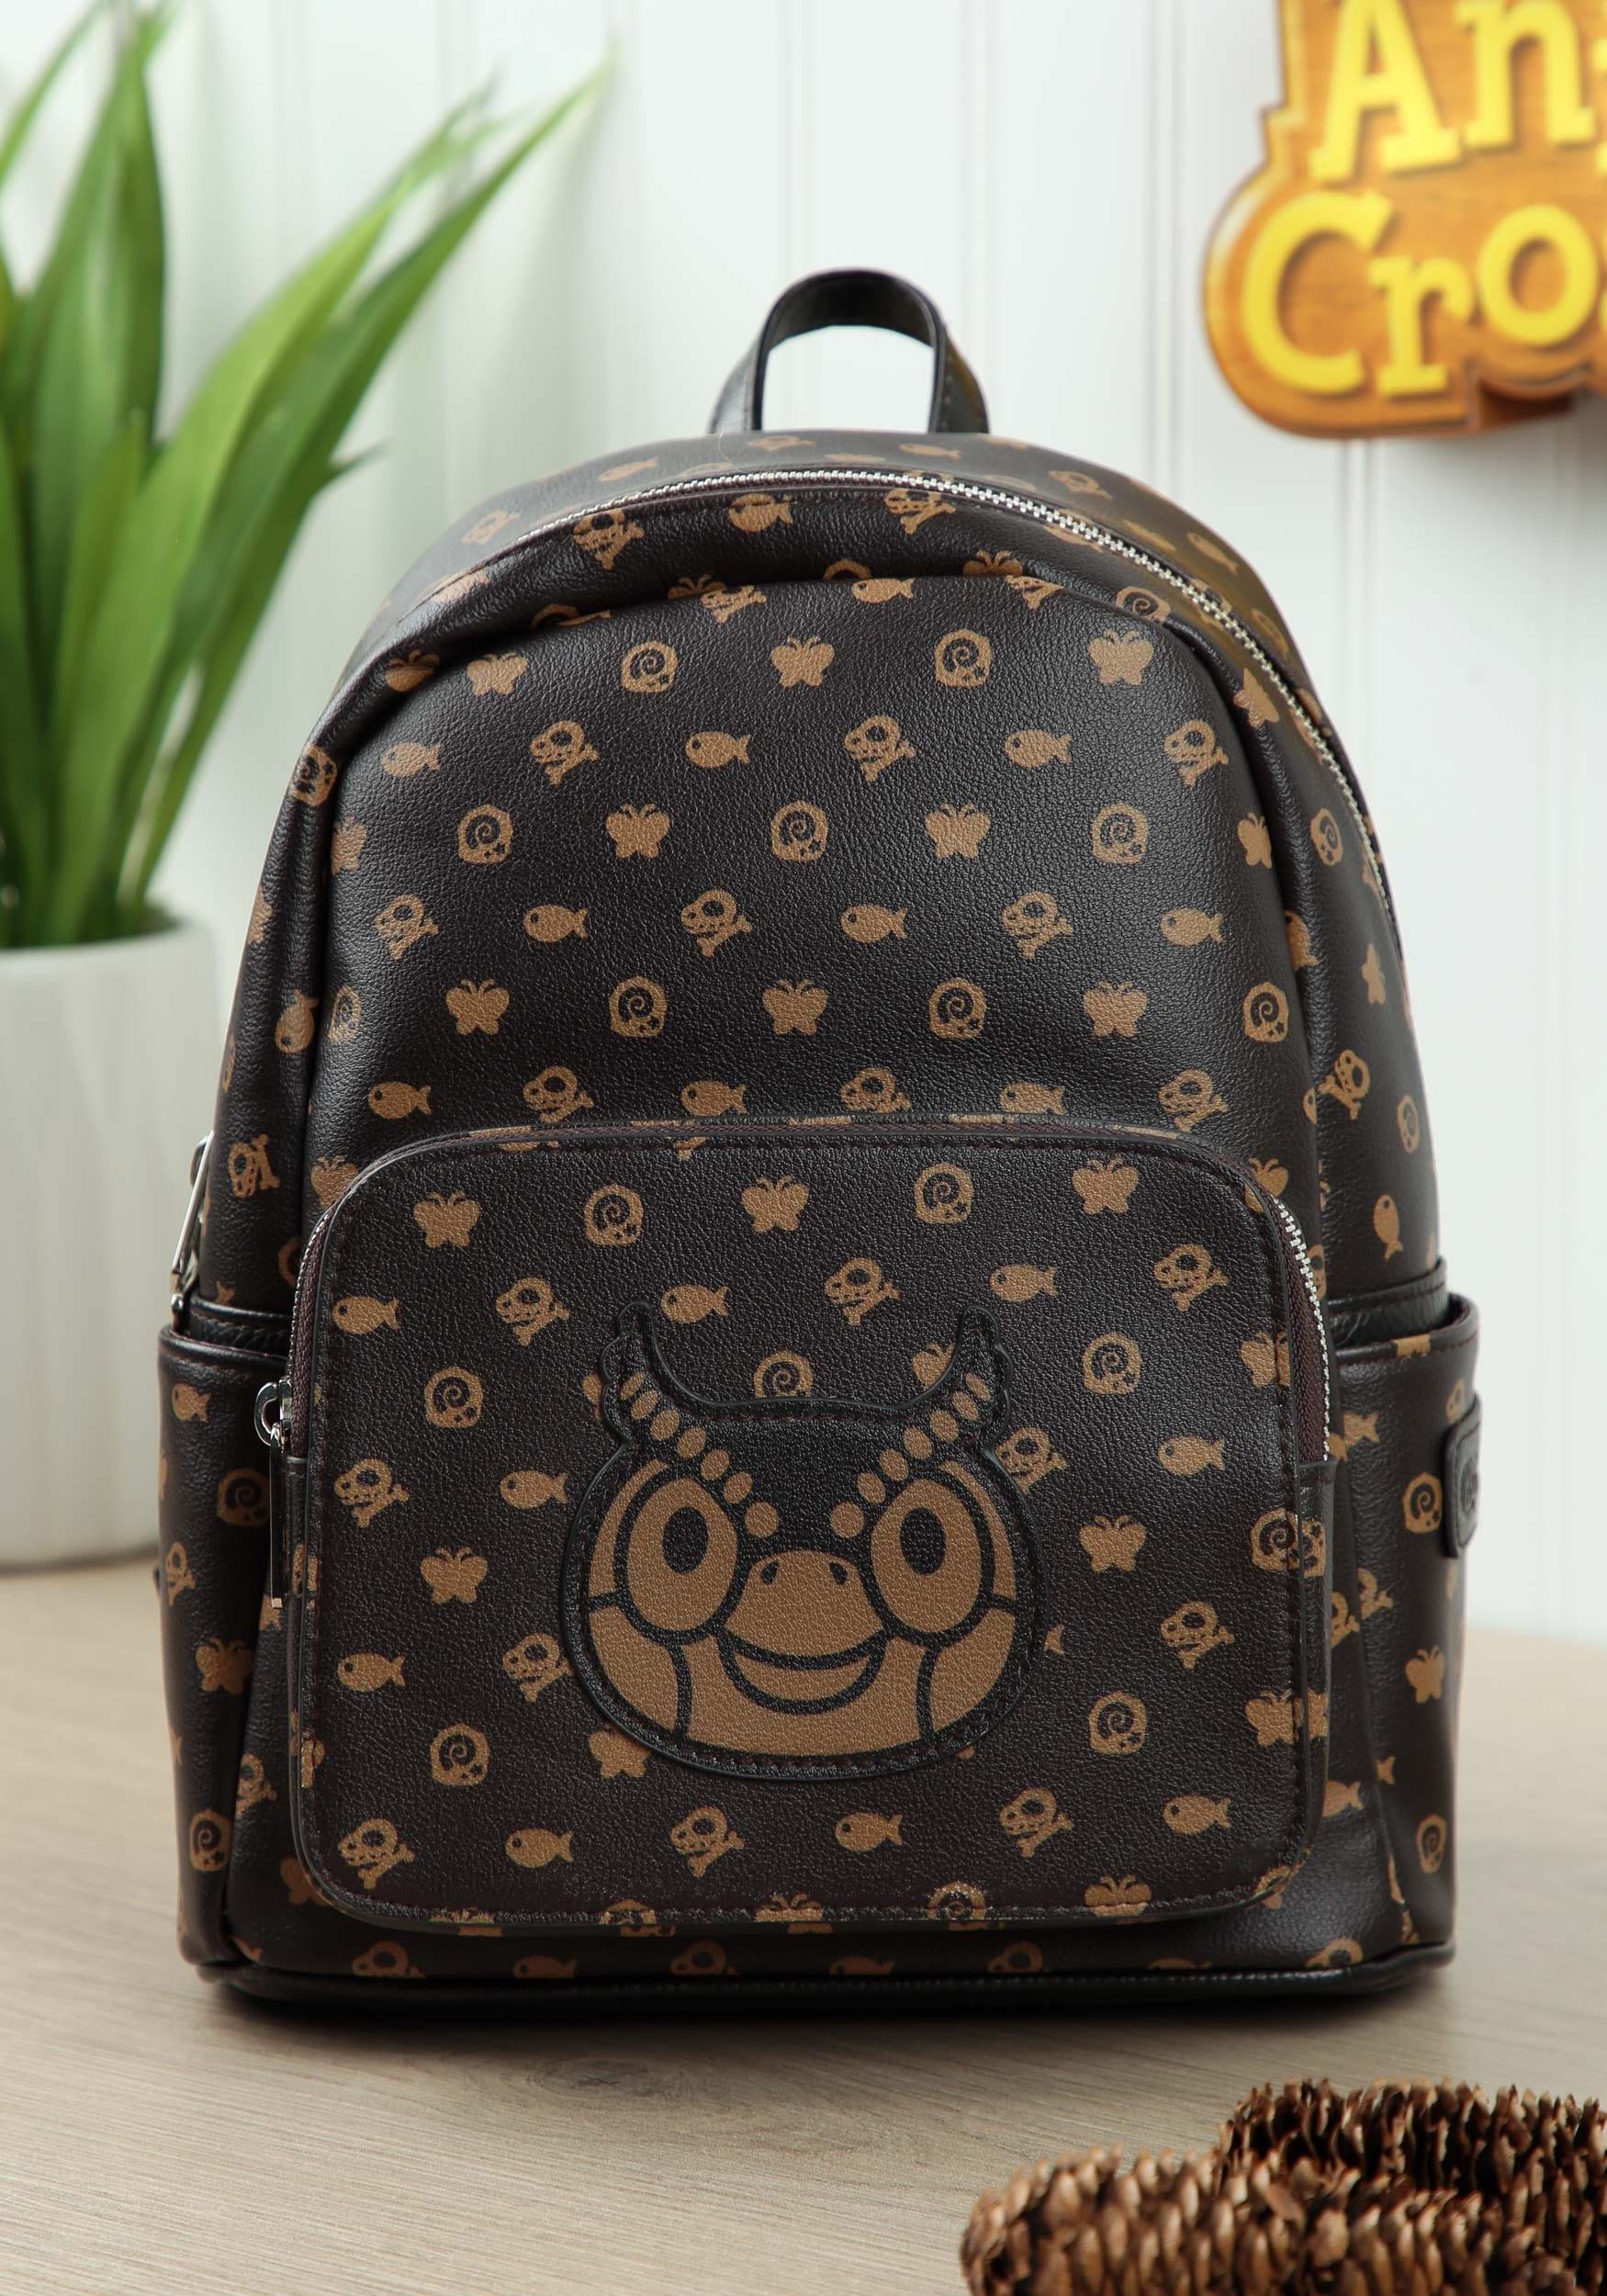 Cakeworthy Animal Crossing Blathers Backpack